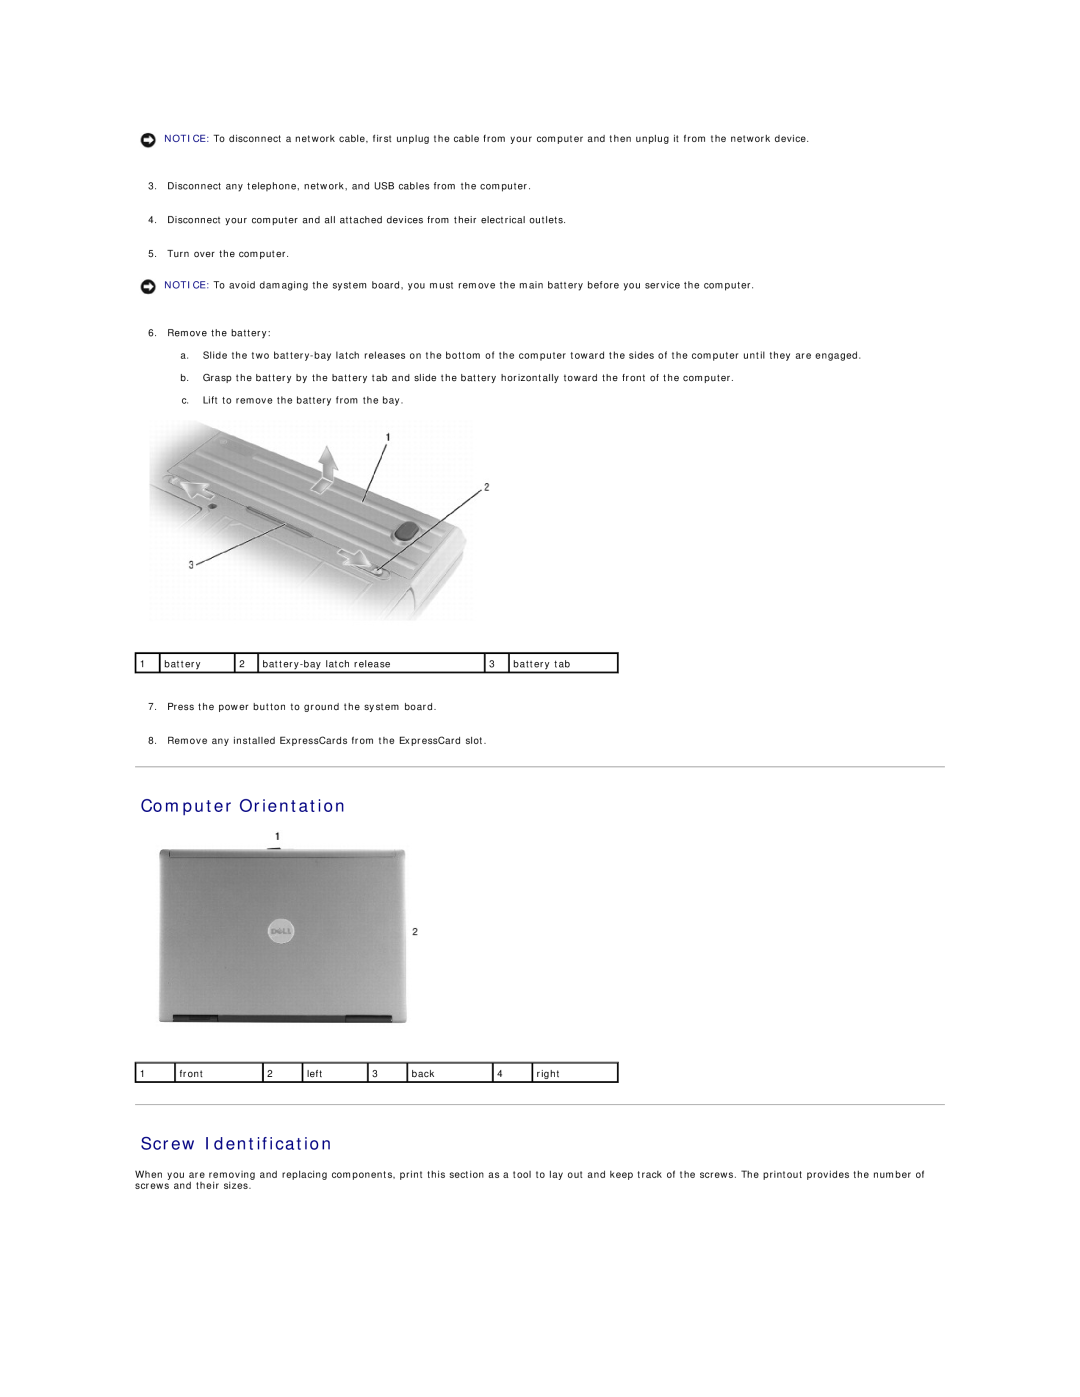 Dell PP18L, D620 manual Computer Orientation, Screw Identification 